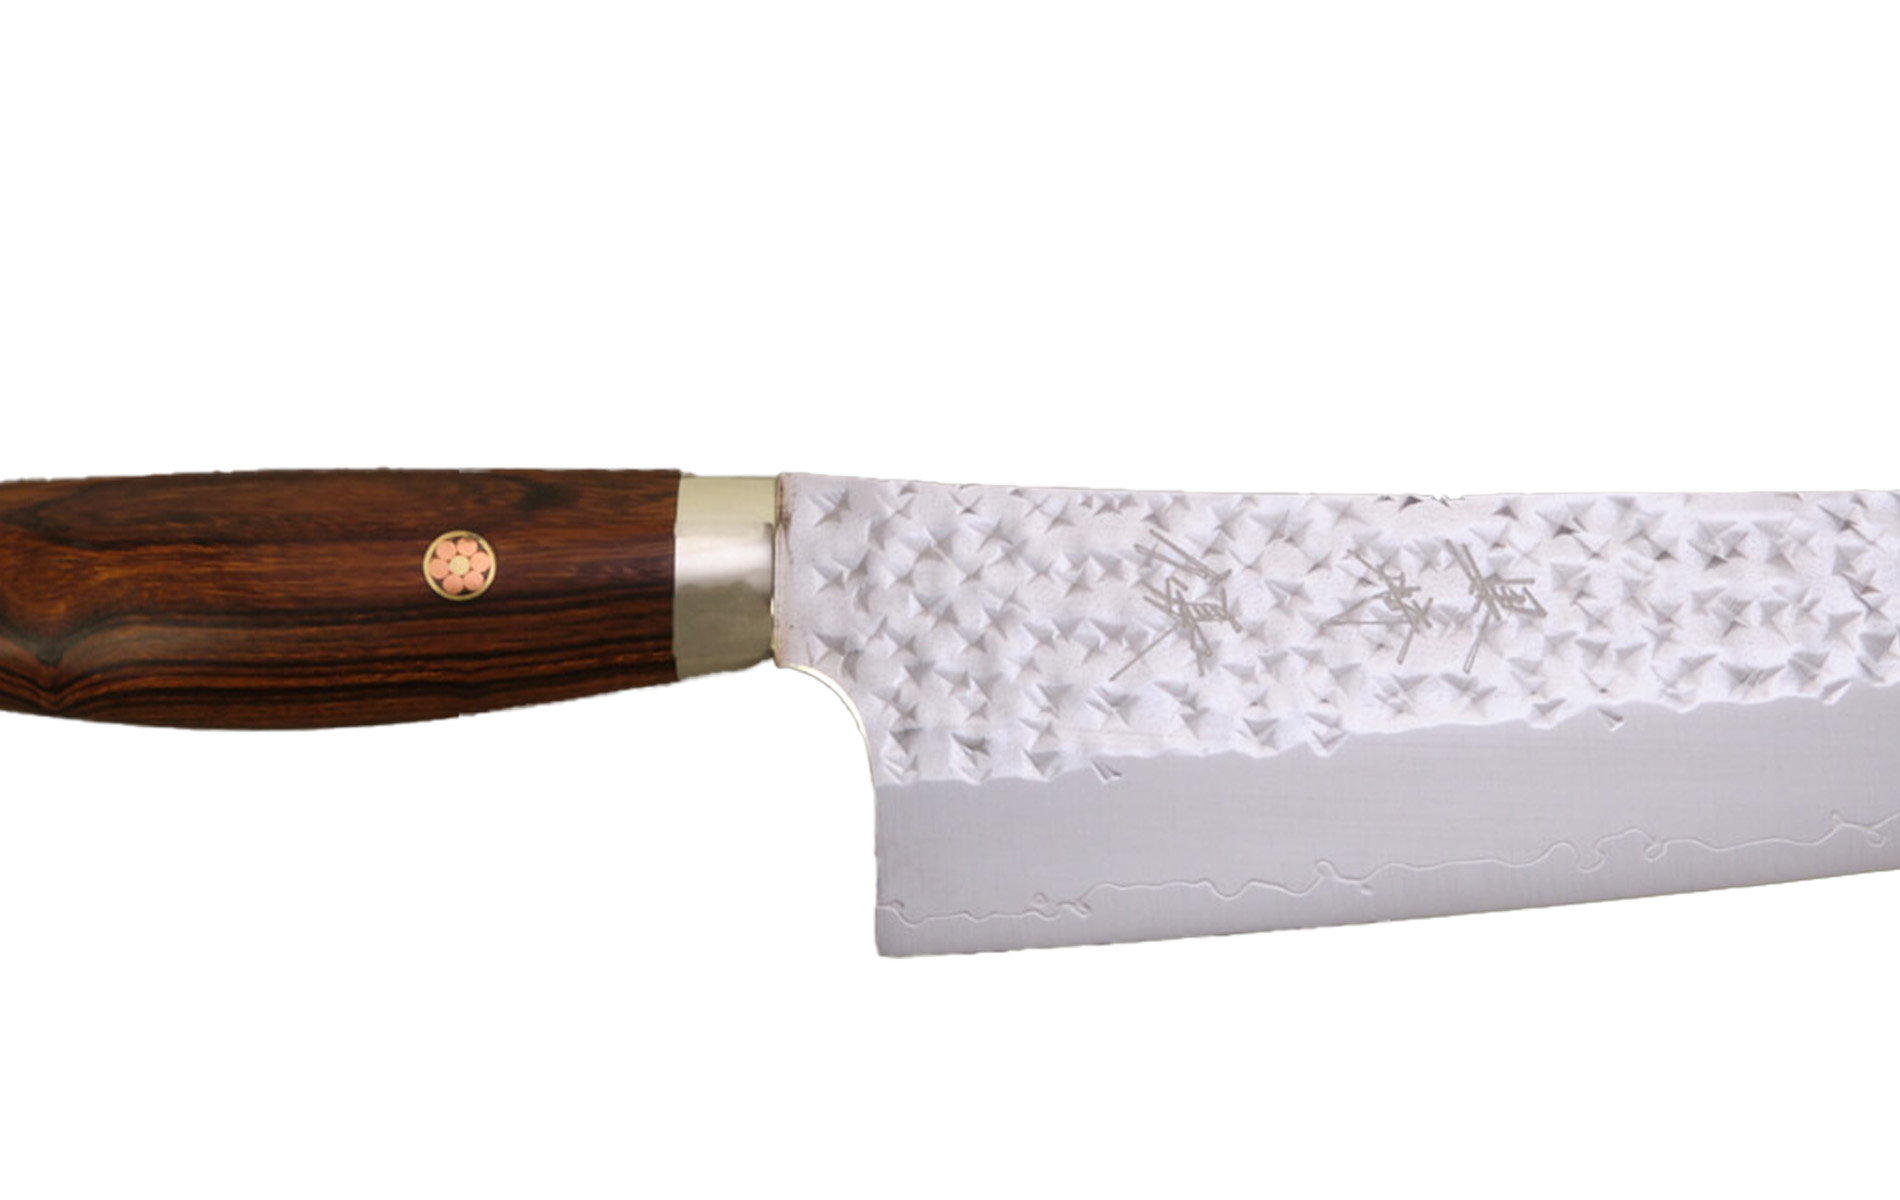 Couteau japonais artisanal de Yu Kurosaki Senko SG2 - Couteau gyuto 27 cm